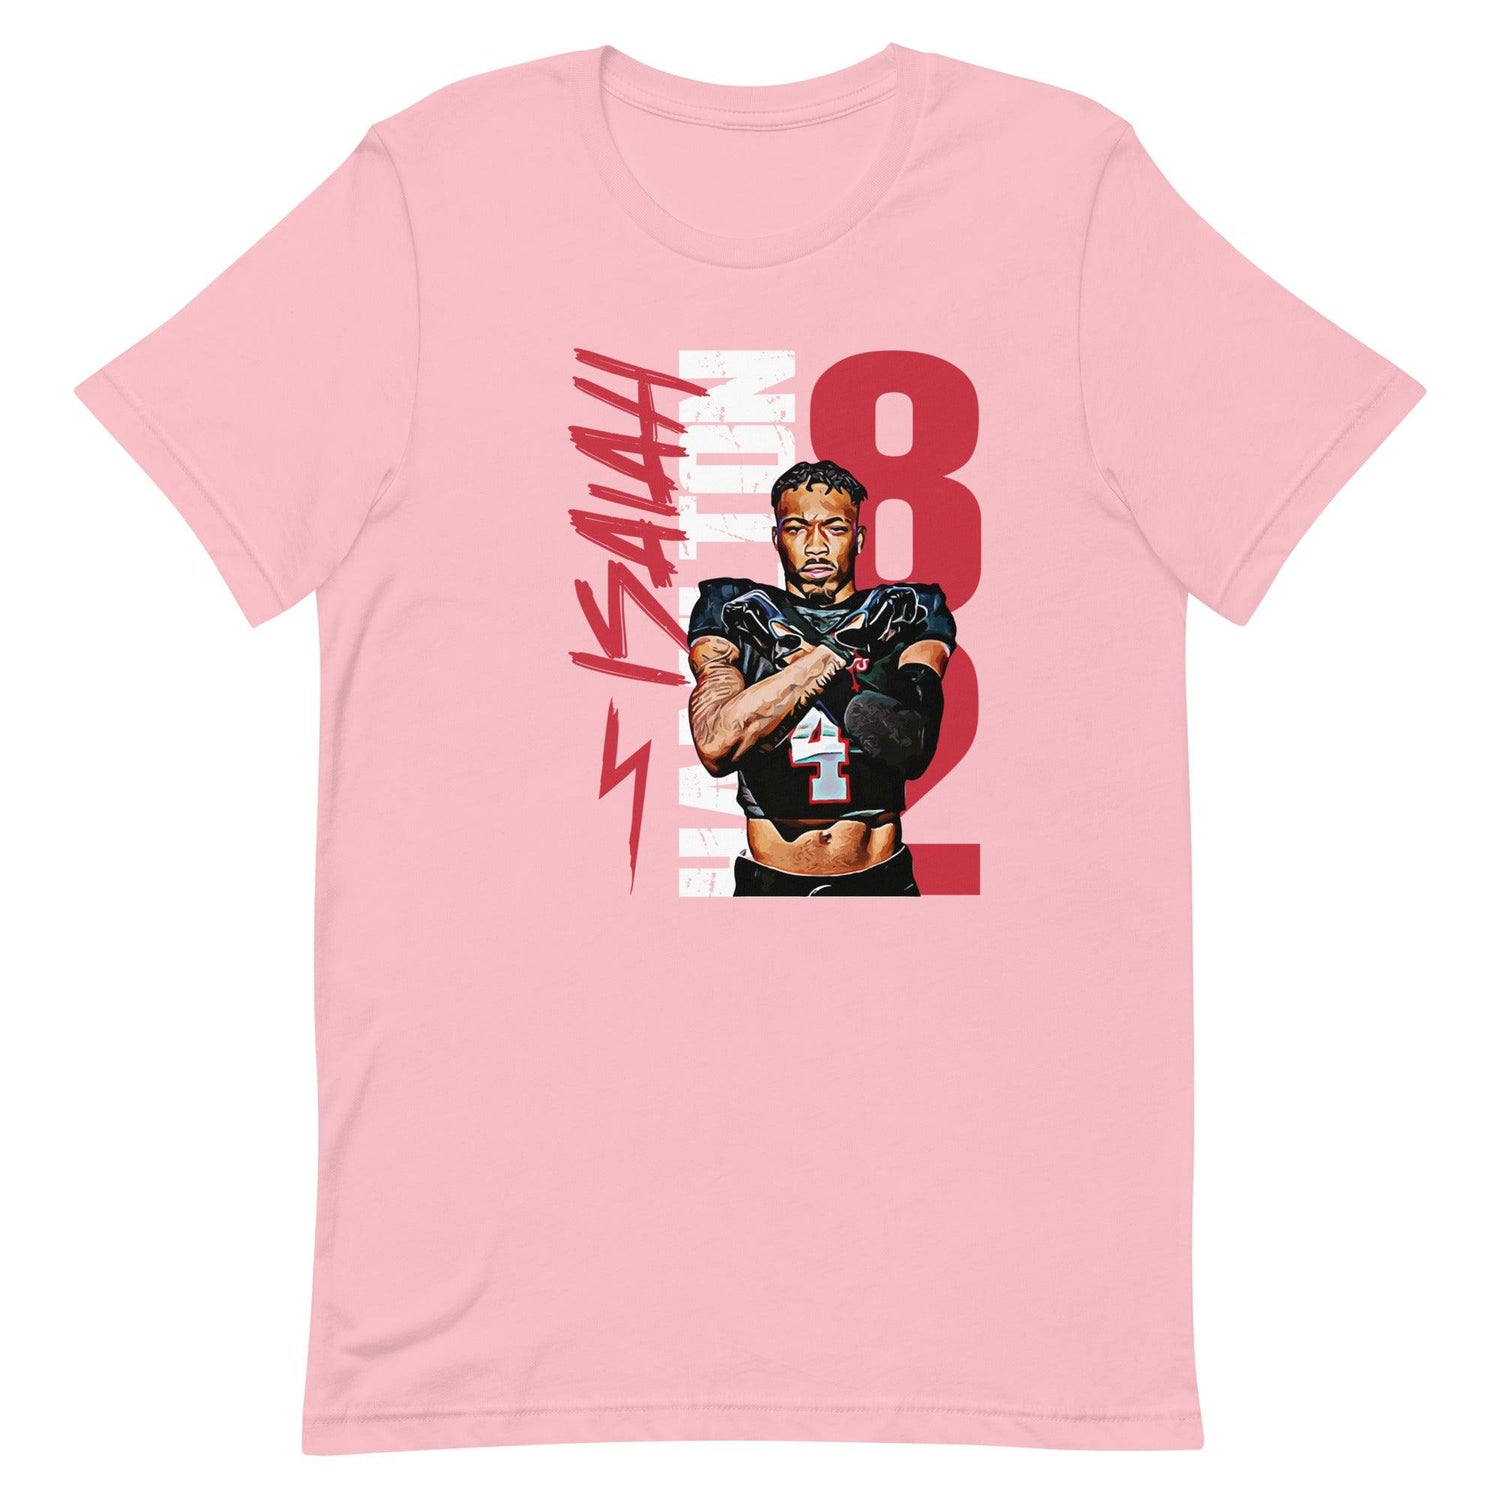 Isaiah Hamilton "Jersey" t-shirt - Fan Arch